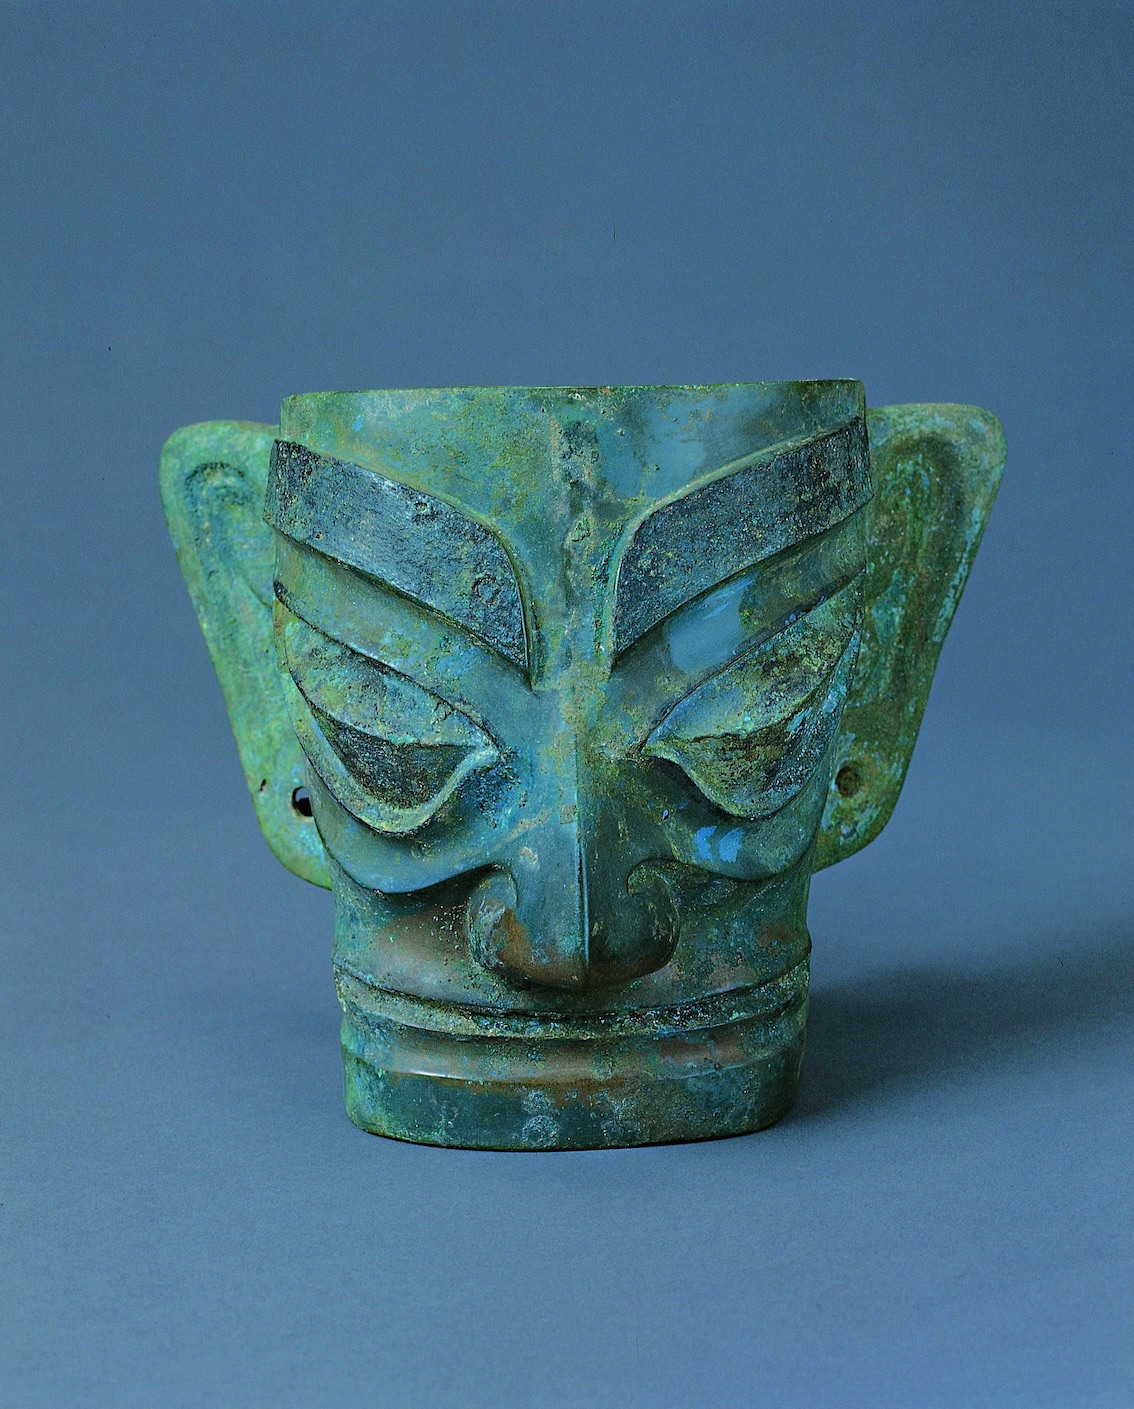 Sanxingdui bronze mask, ca.1600 - 1046 BCE, Sanxingdui Museum Gallery, Sichuan Province, China.